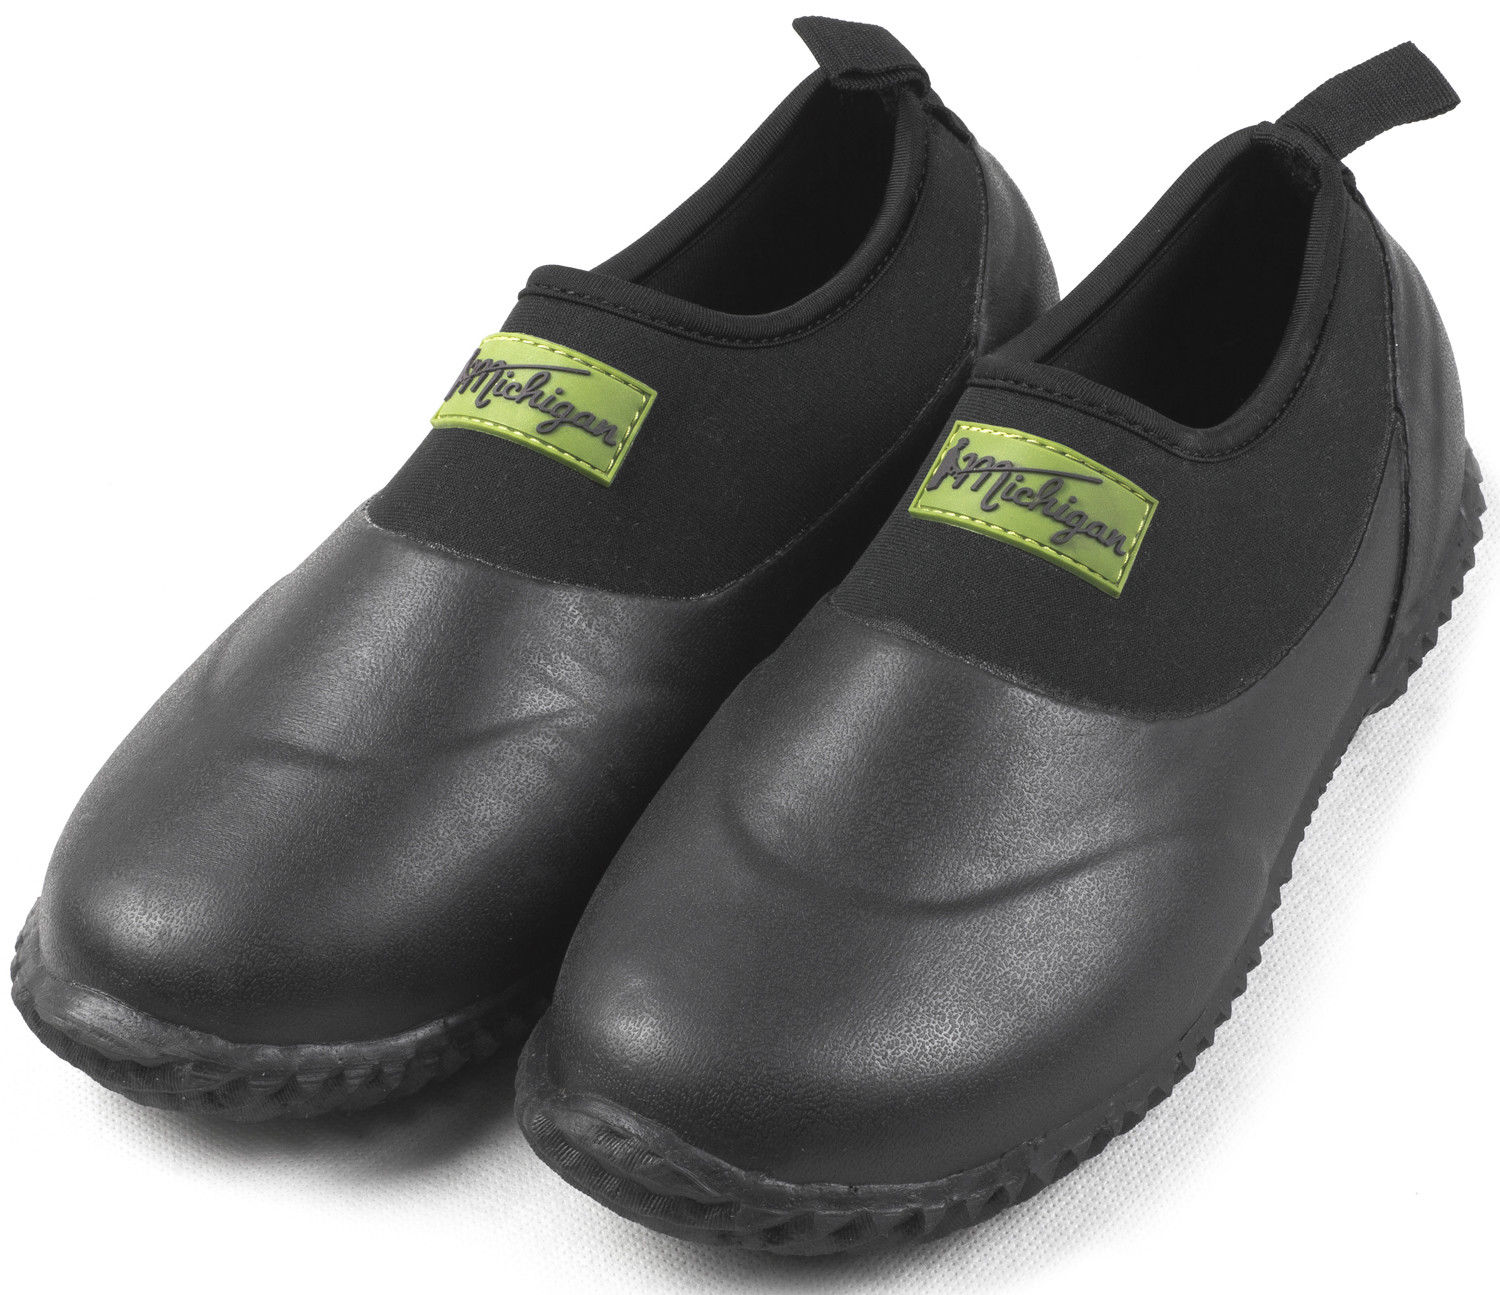 neoprene garden shoes